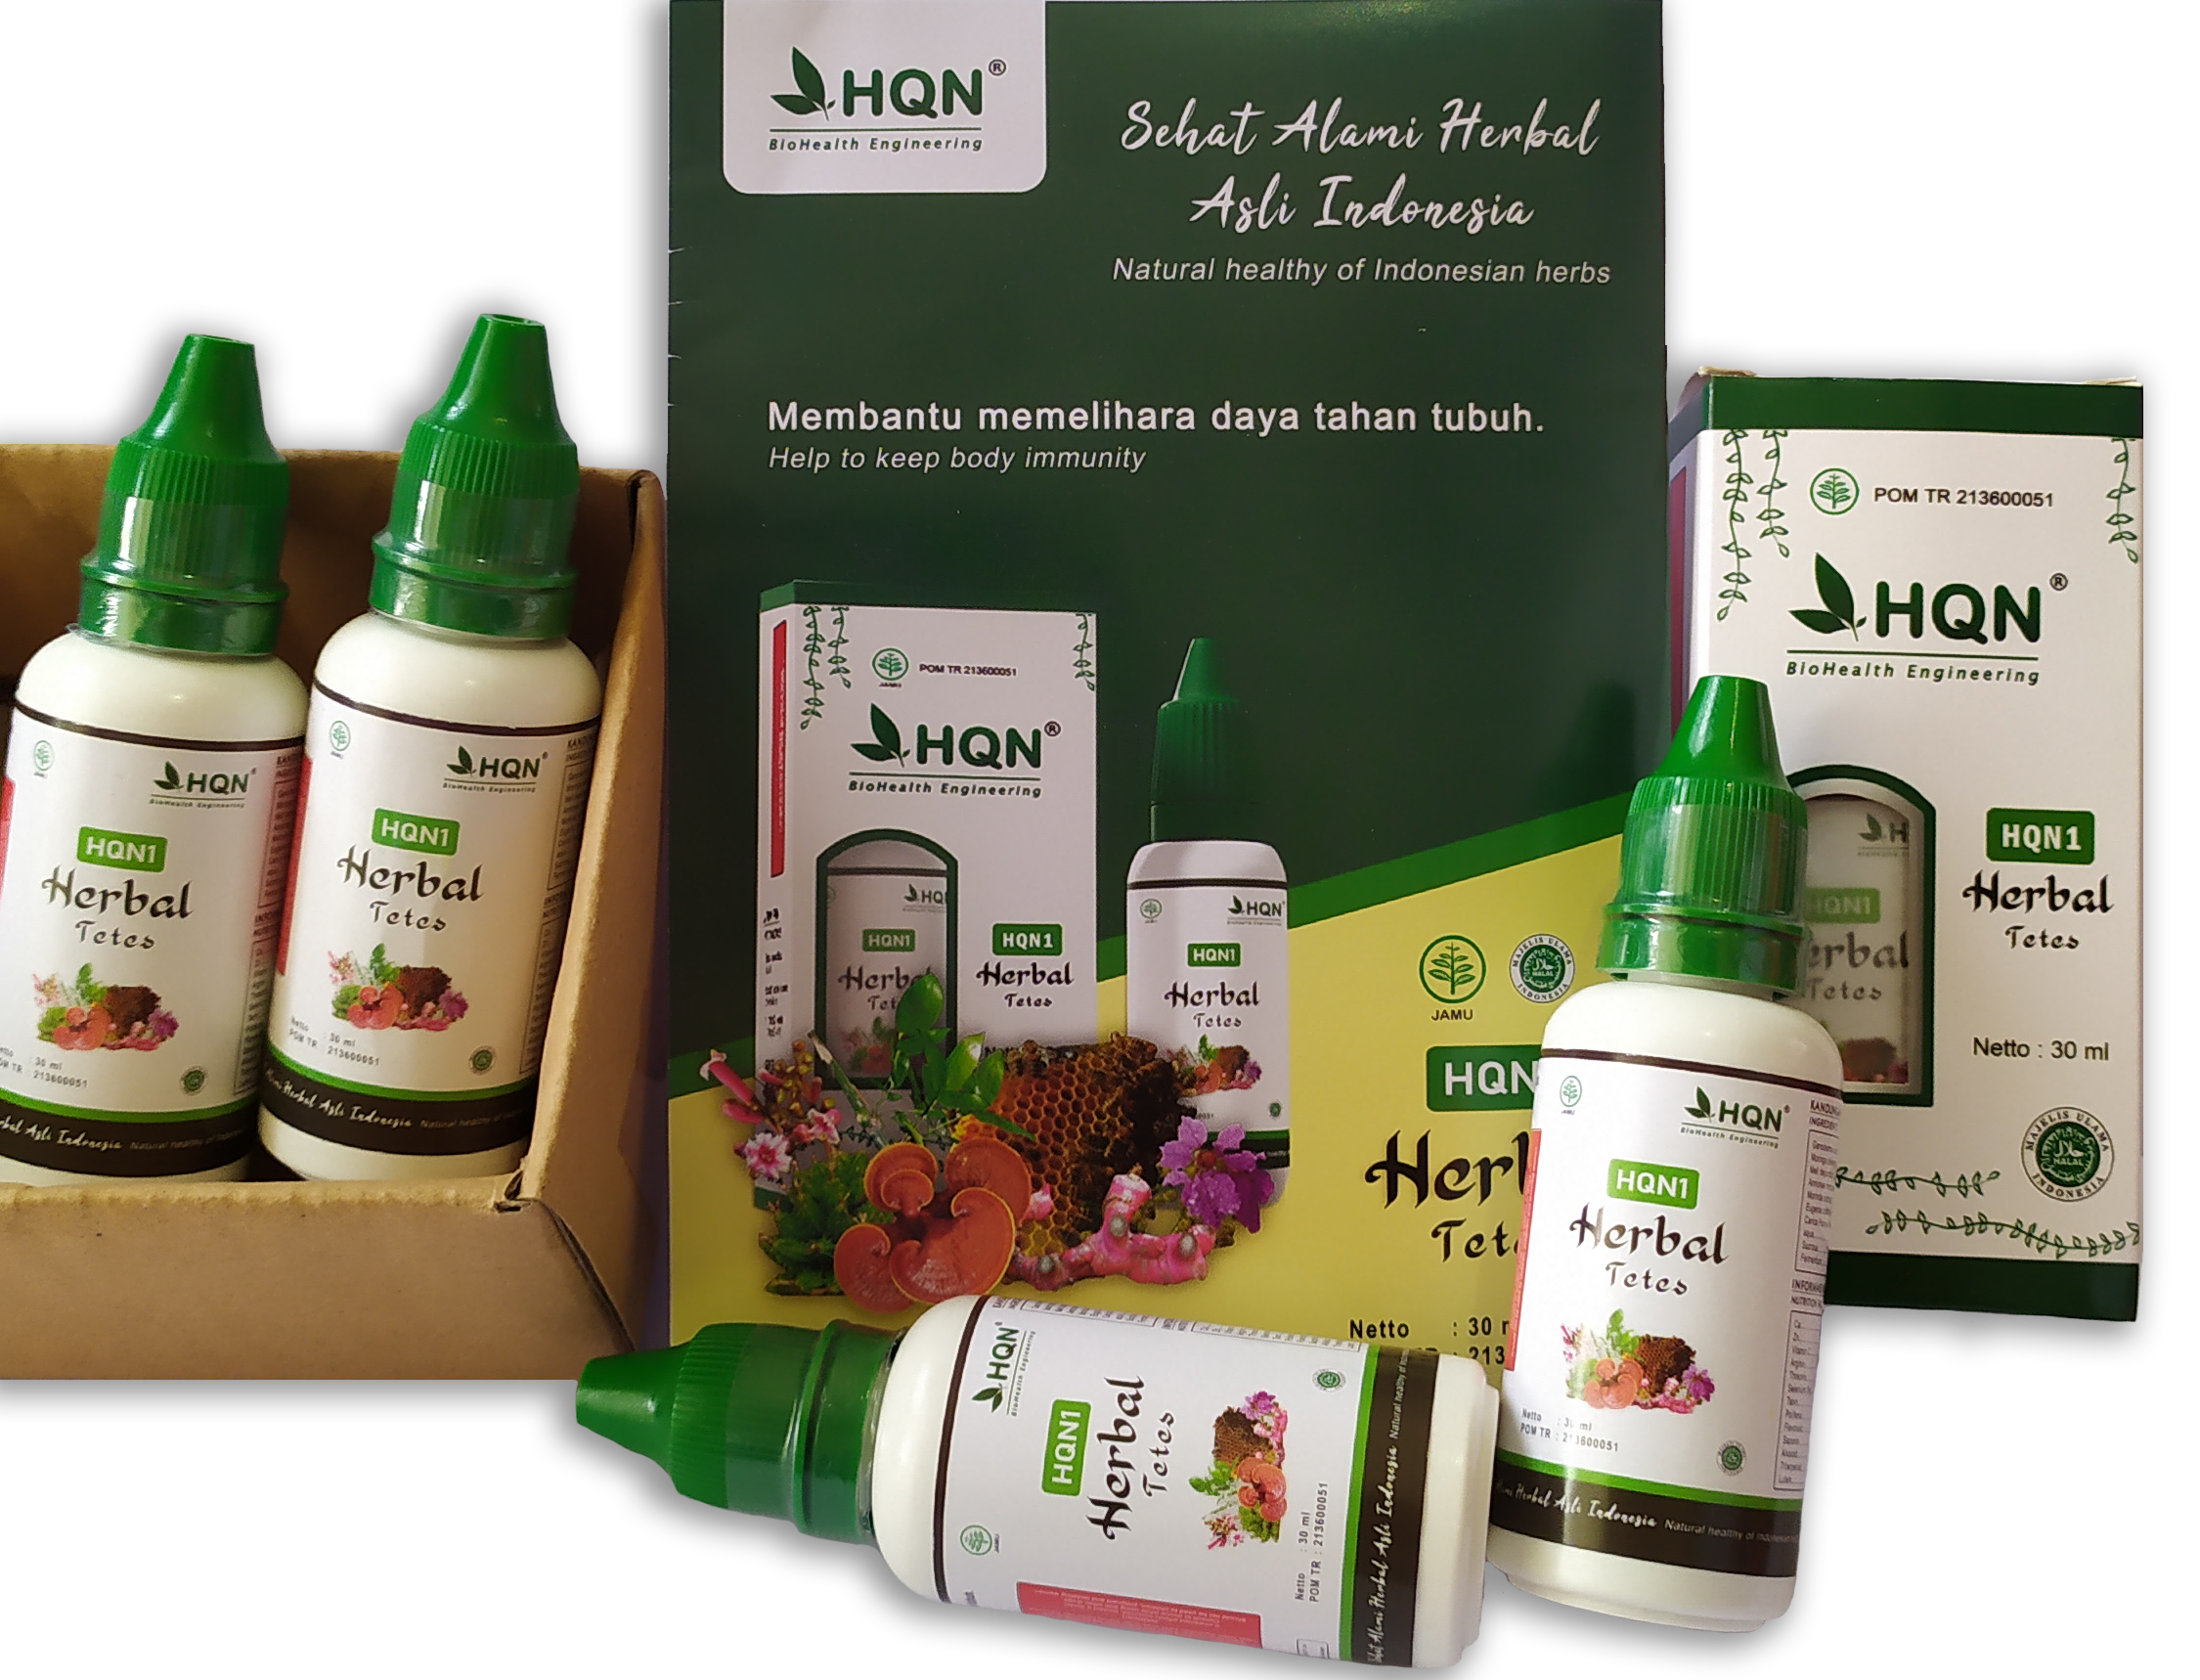 HQN1 Herbal Tetes